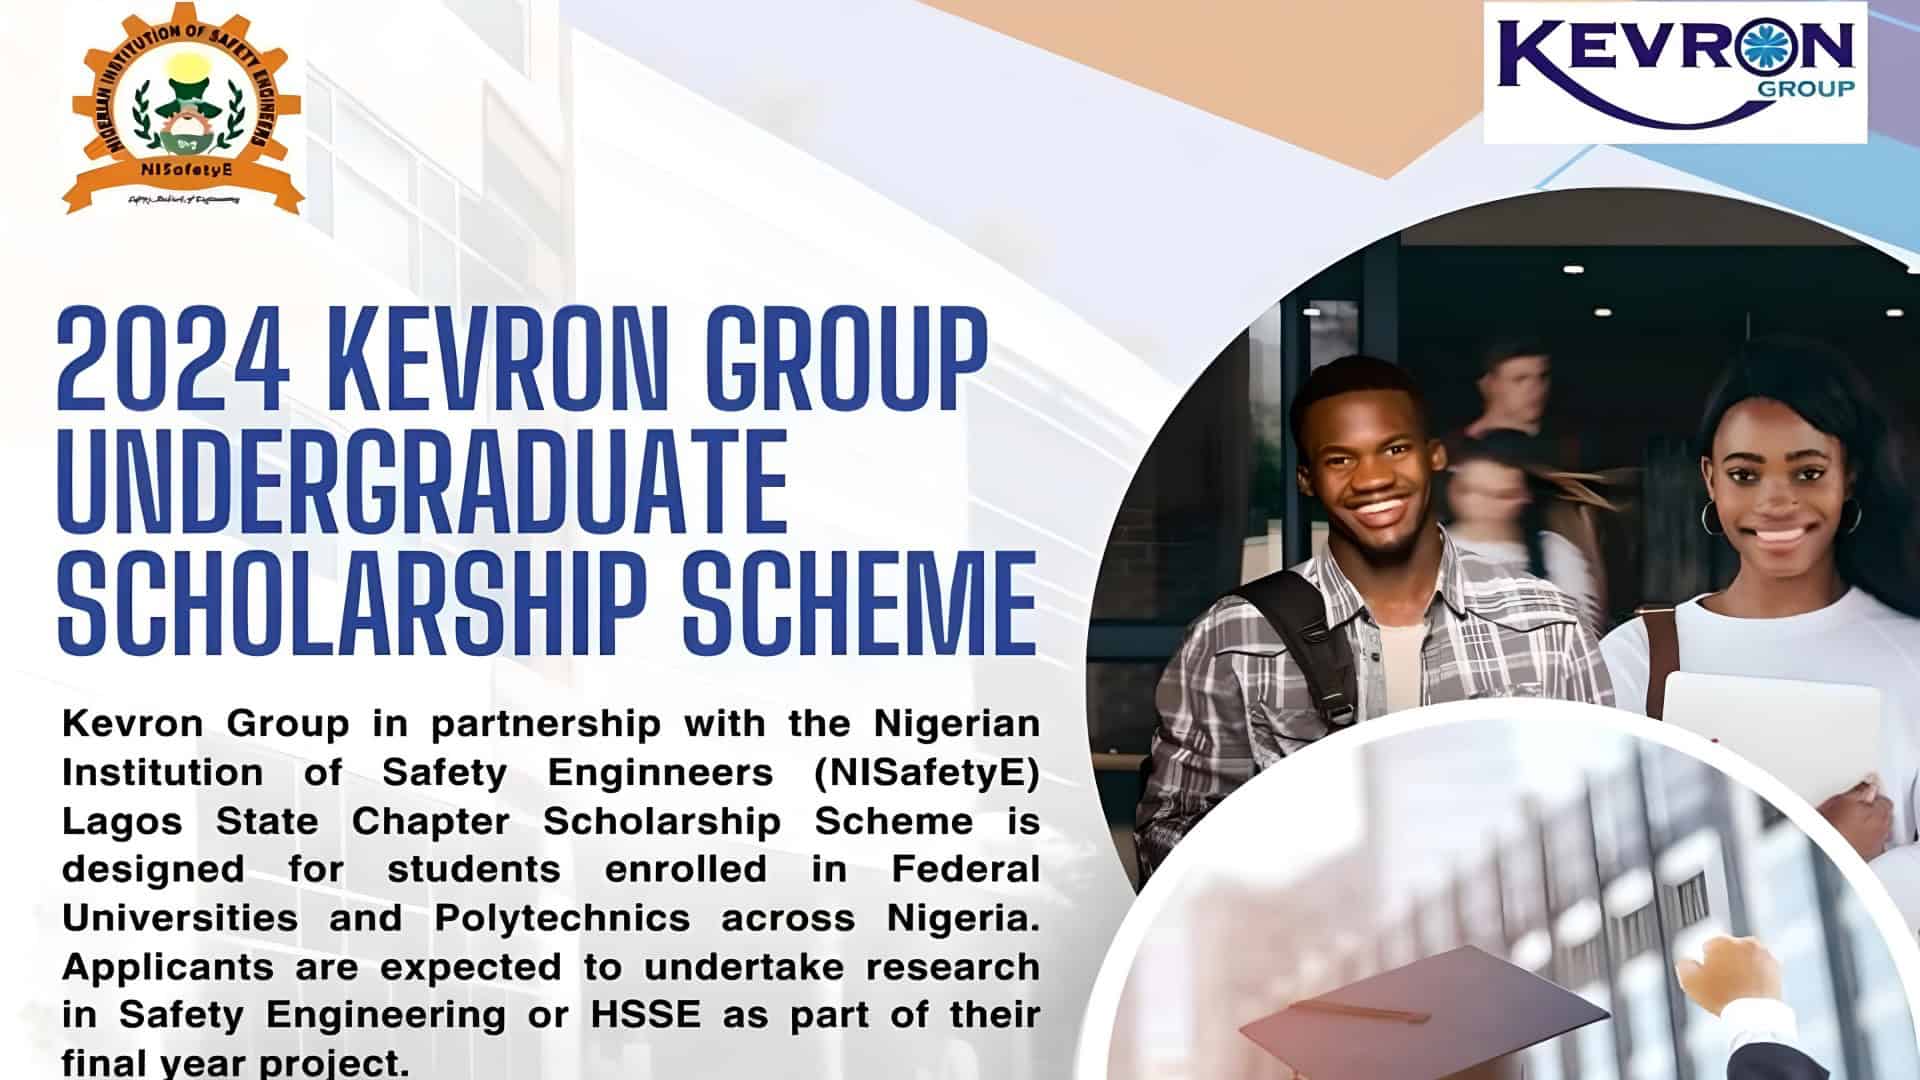 Kevron Consulting Limited Undergraduate Scholarship